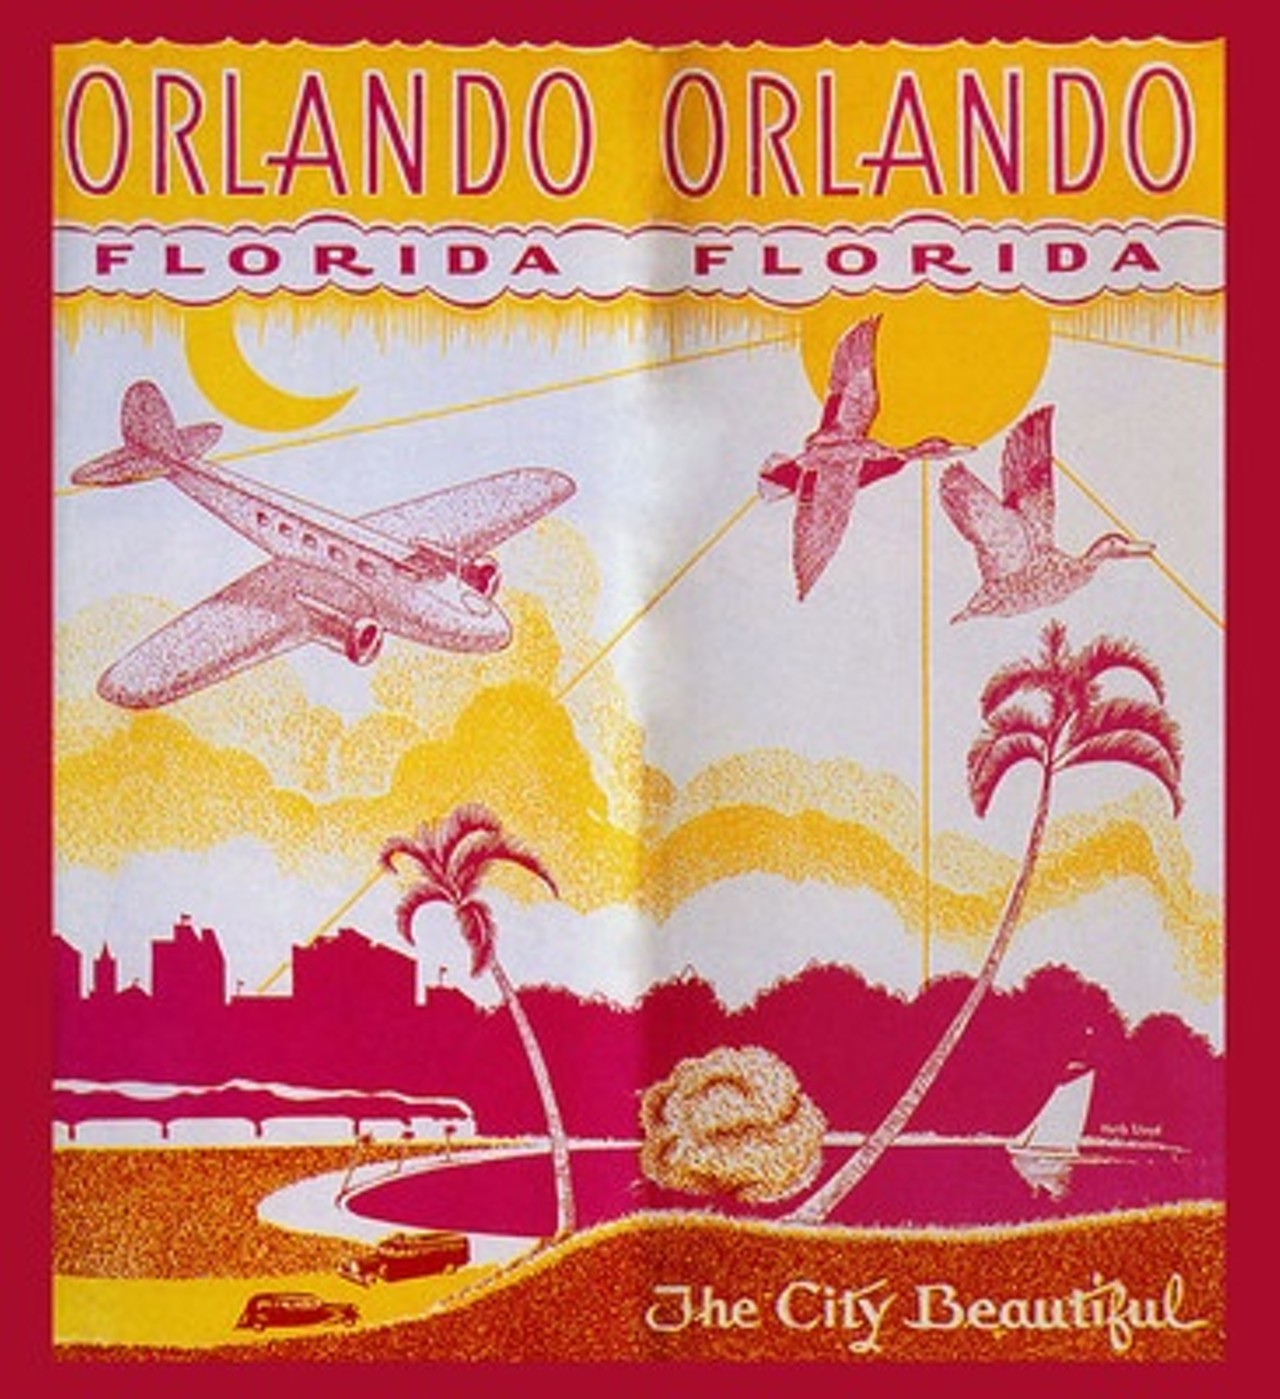 Old Orlando poster with birds and planes, via Pinterest.com